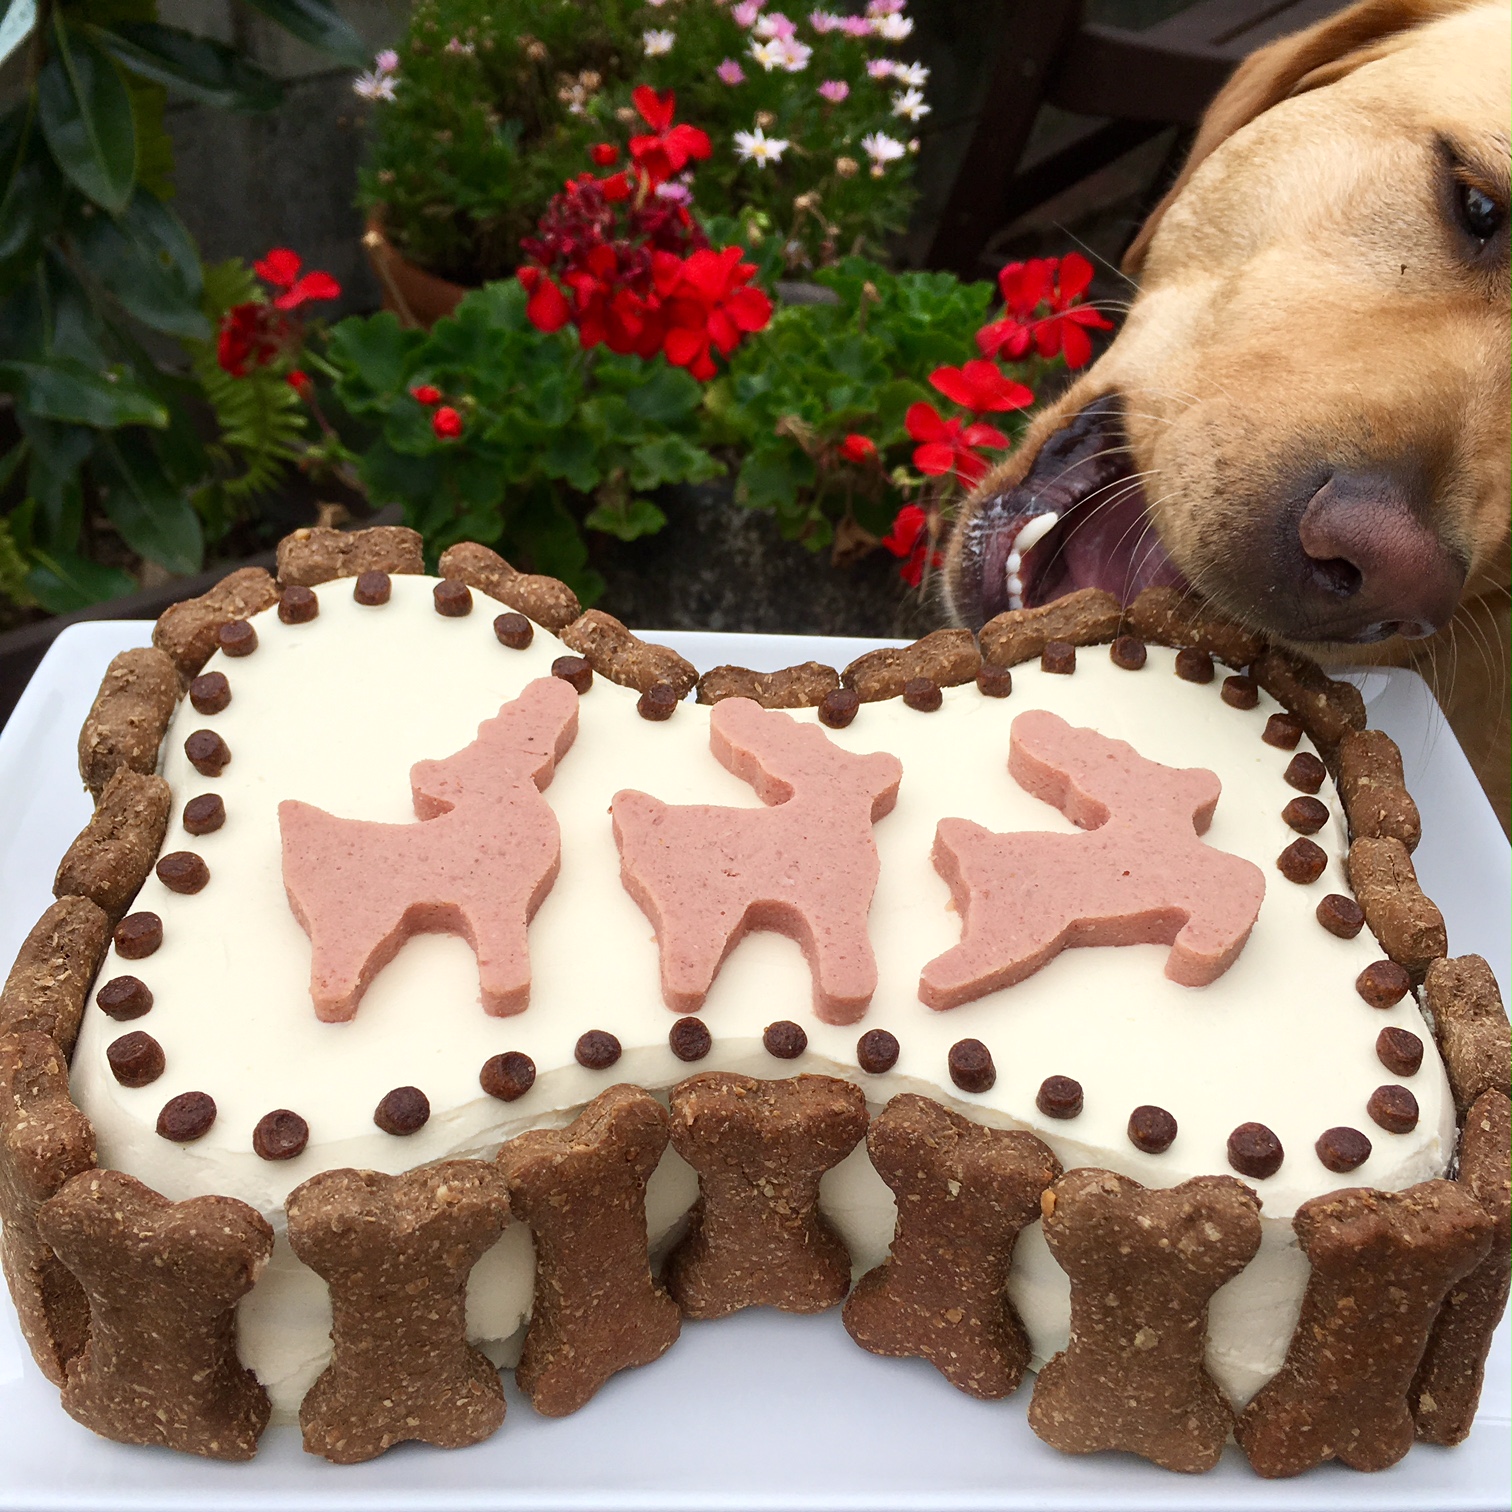 37 Top Images Pet Friendly Bakery Near Me - Dog Friendly Feeding In Solihull Near Warwickshire